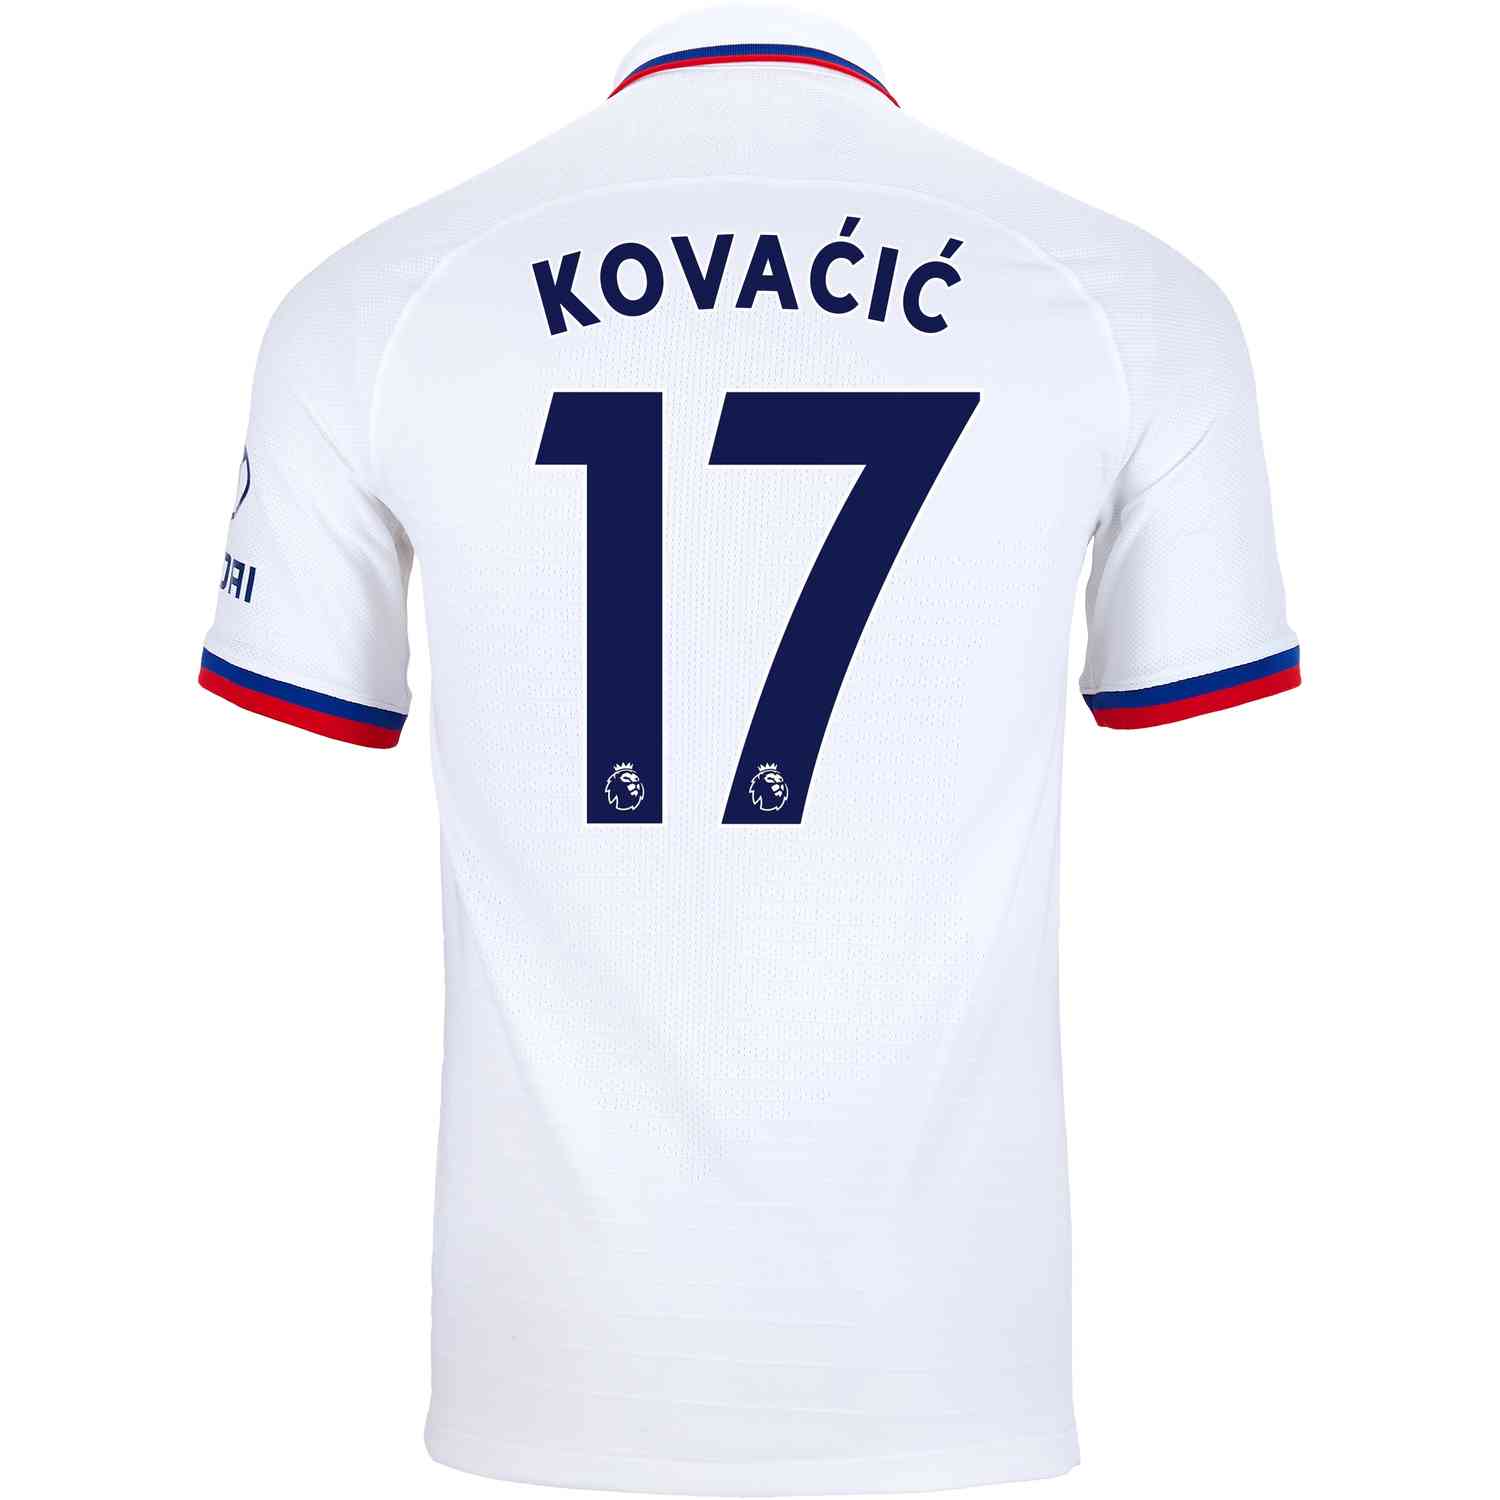 2019/20 Nike Mateo Kovacic Chelsea Away 